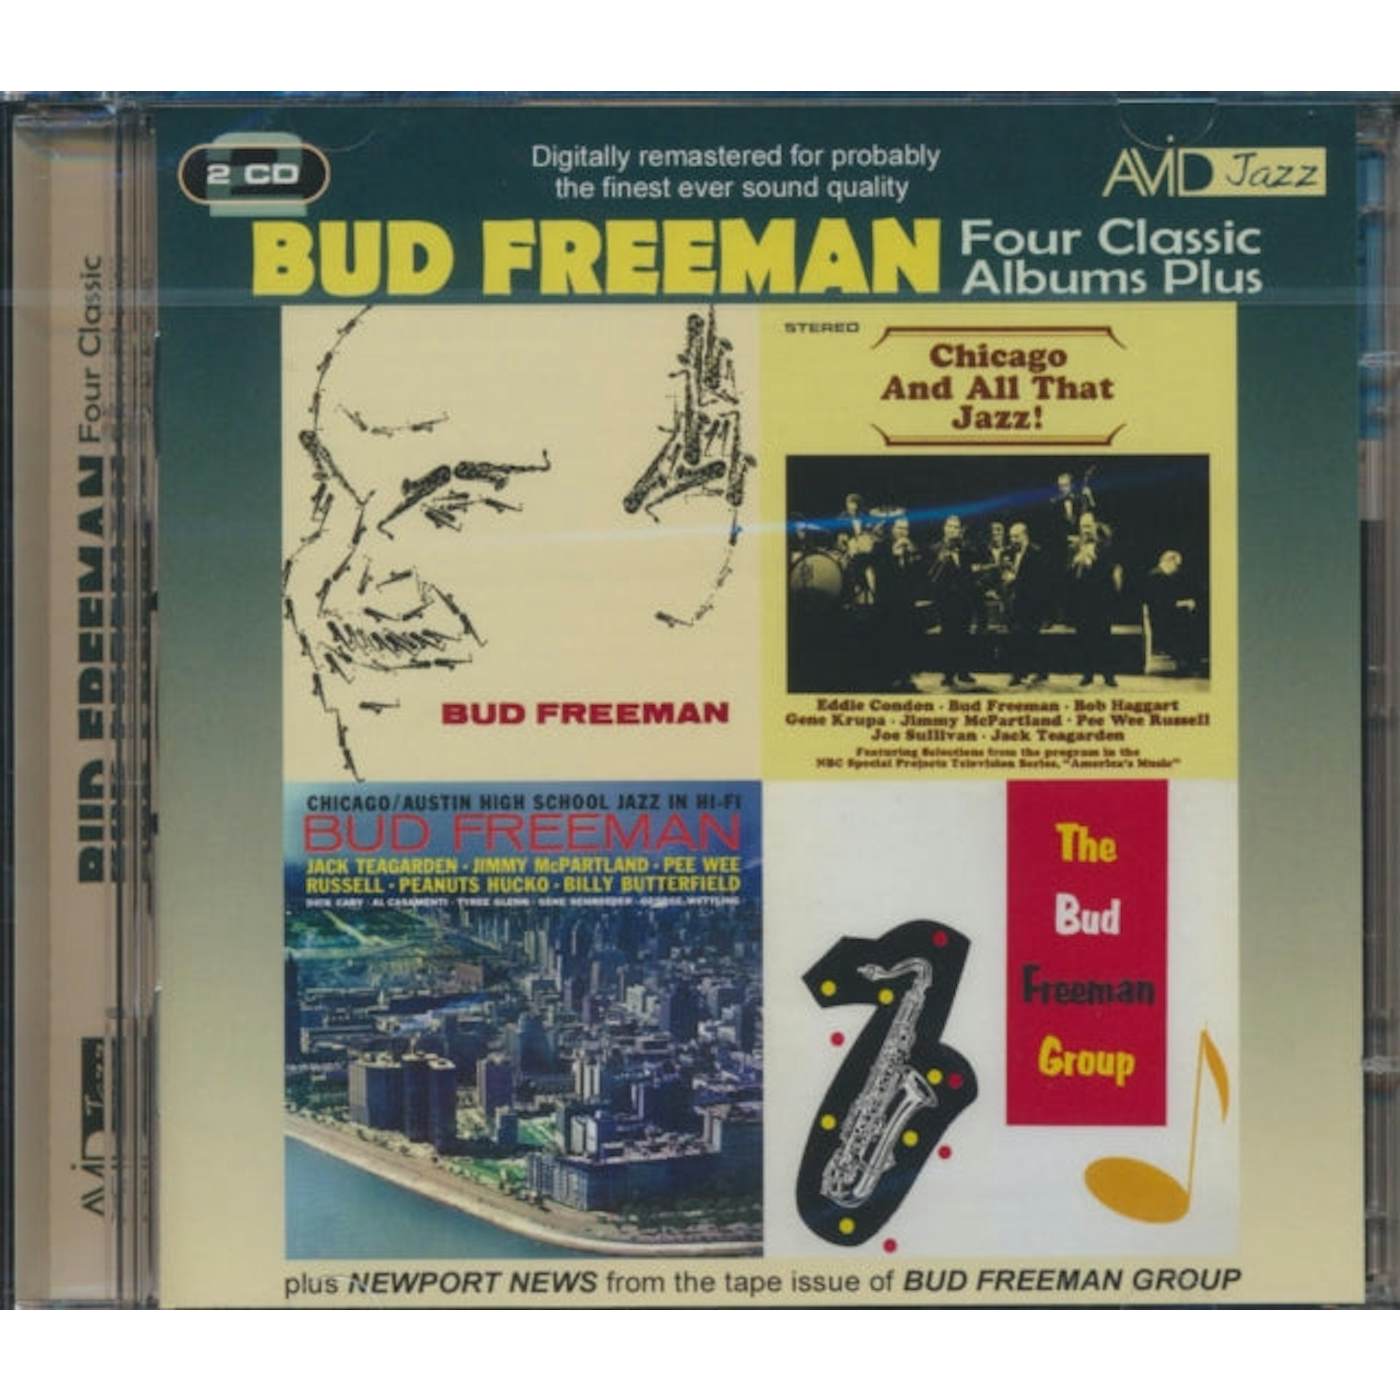 Bud Freeman CD - Four Classic Albums Plus (Bud Freeman / Chicago And All That Jazz / Chicago- Austin High School Jazz In Hi-Fi / The Bud Freeman Group)